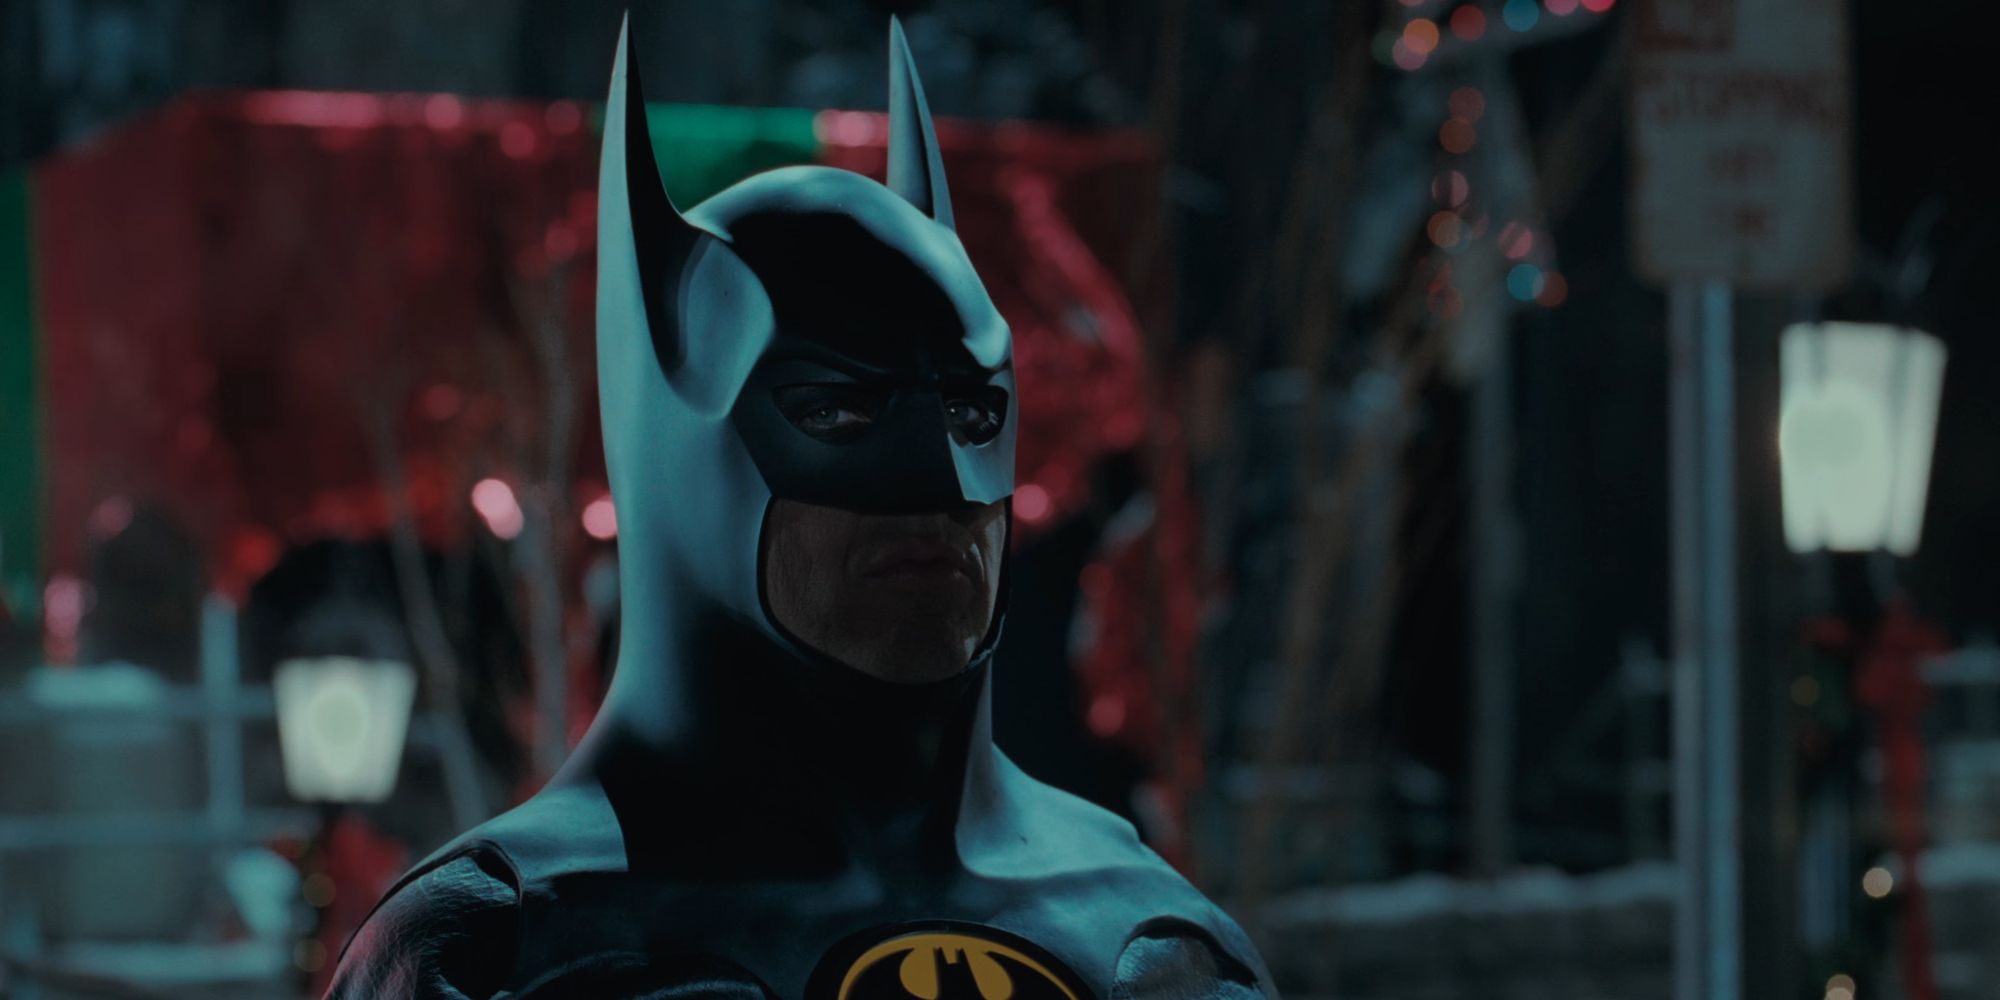 Michael Keaton as Batman glaring at a clown in Batman Returns